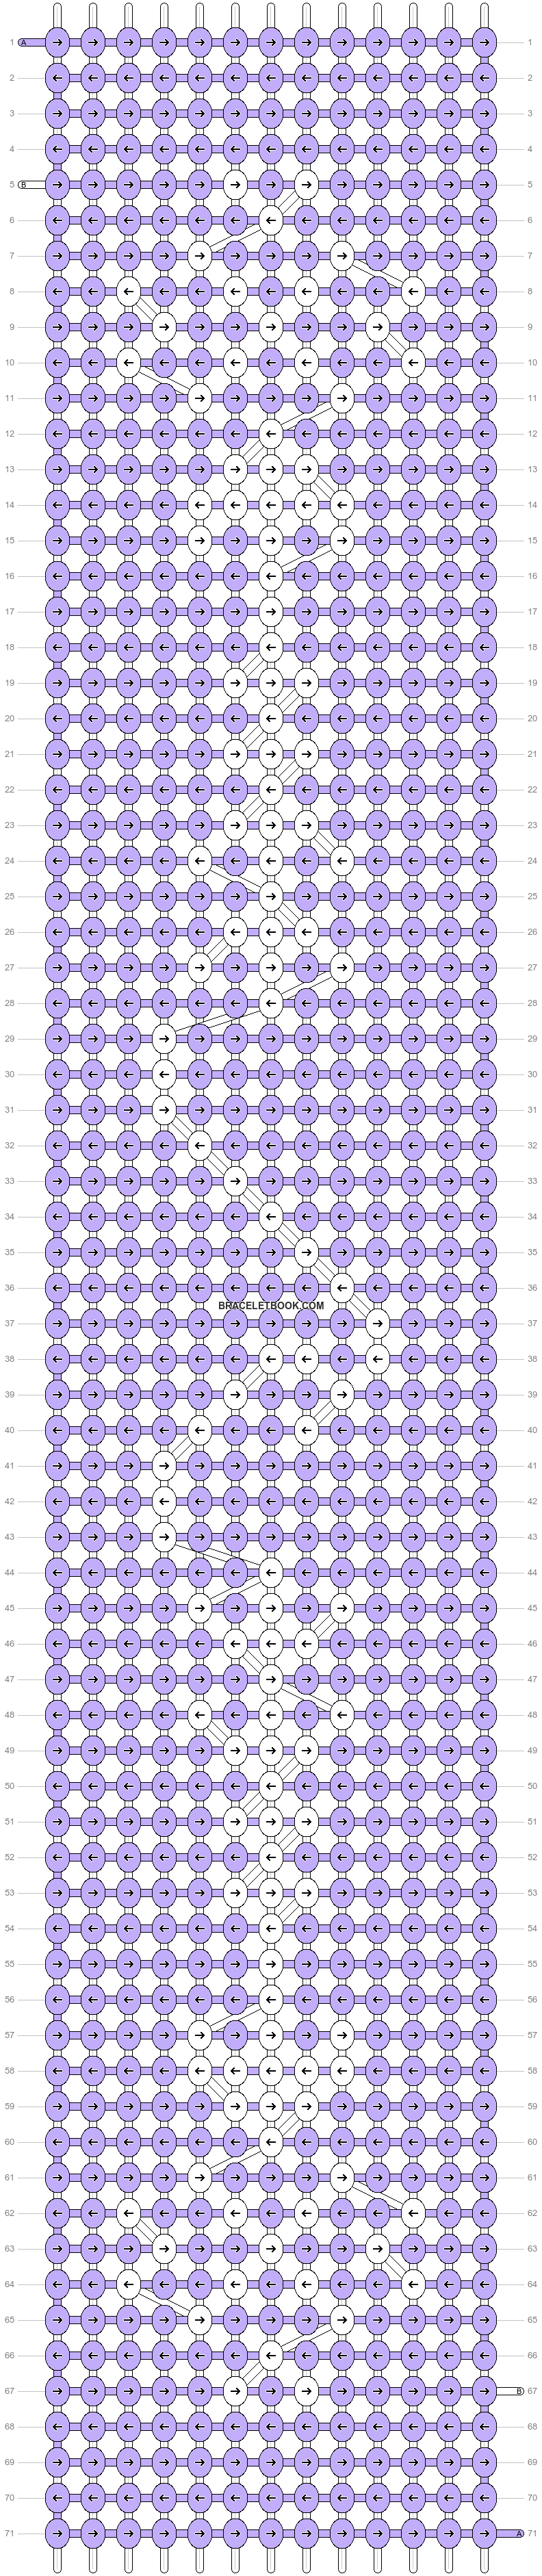 Alpha pattern #57396 variation #100114 pattern